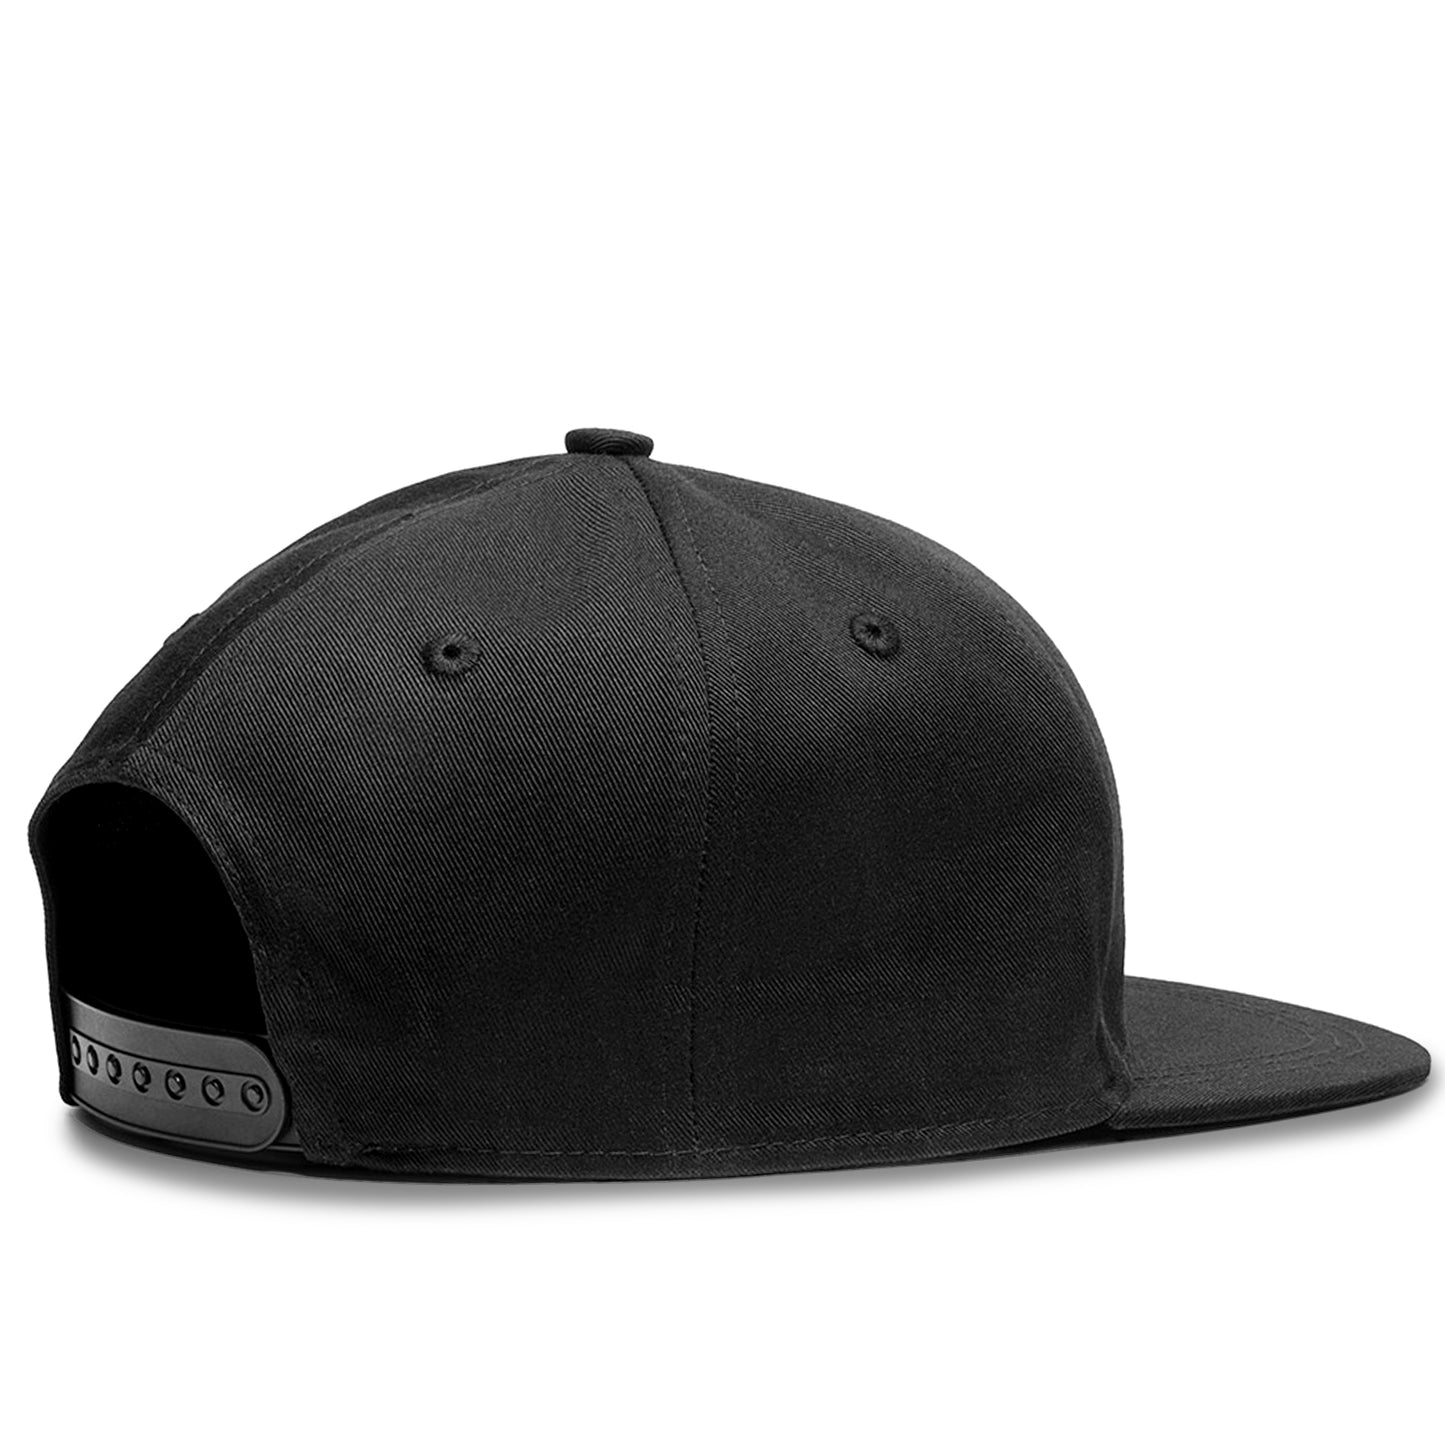 Pins & Bones Ungodly Goth Hat, Alternative Fashion, Black Gothic Snapback Hat, One Size Fits All